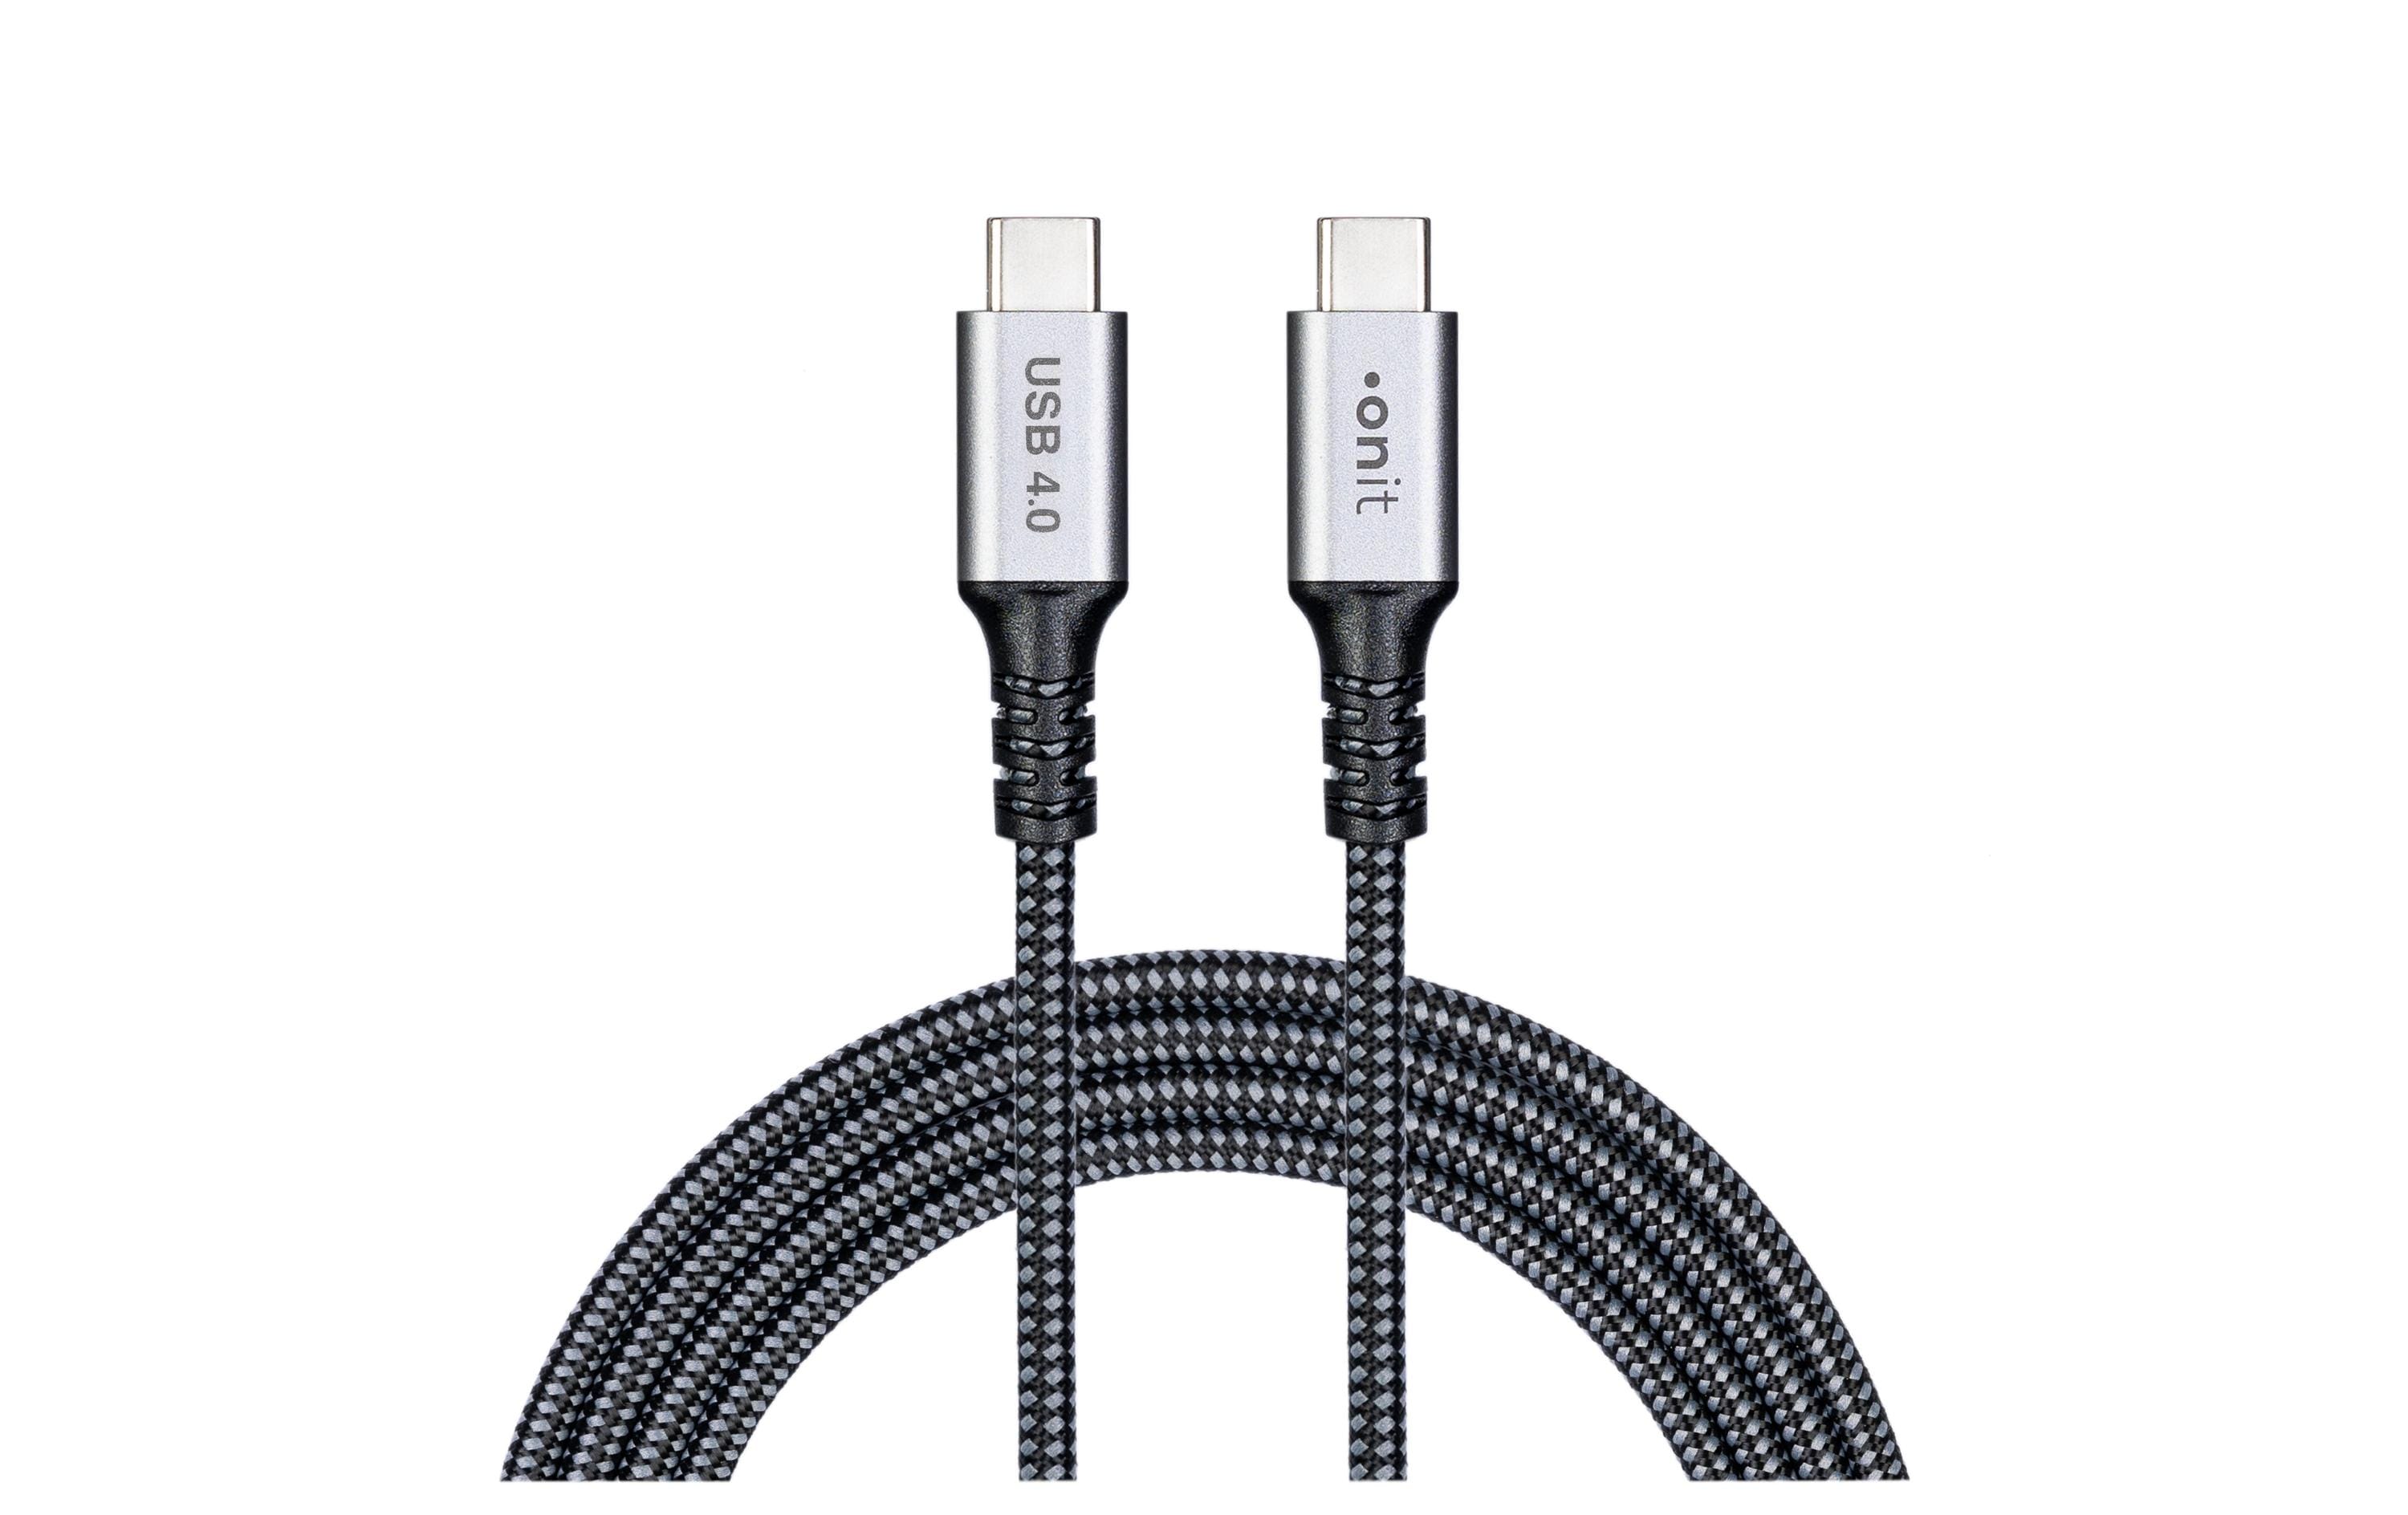 onit USB4-Kabel Premium USB C - USB C 1 m, Grau/Schwarz